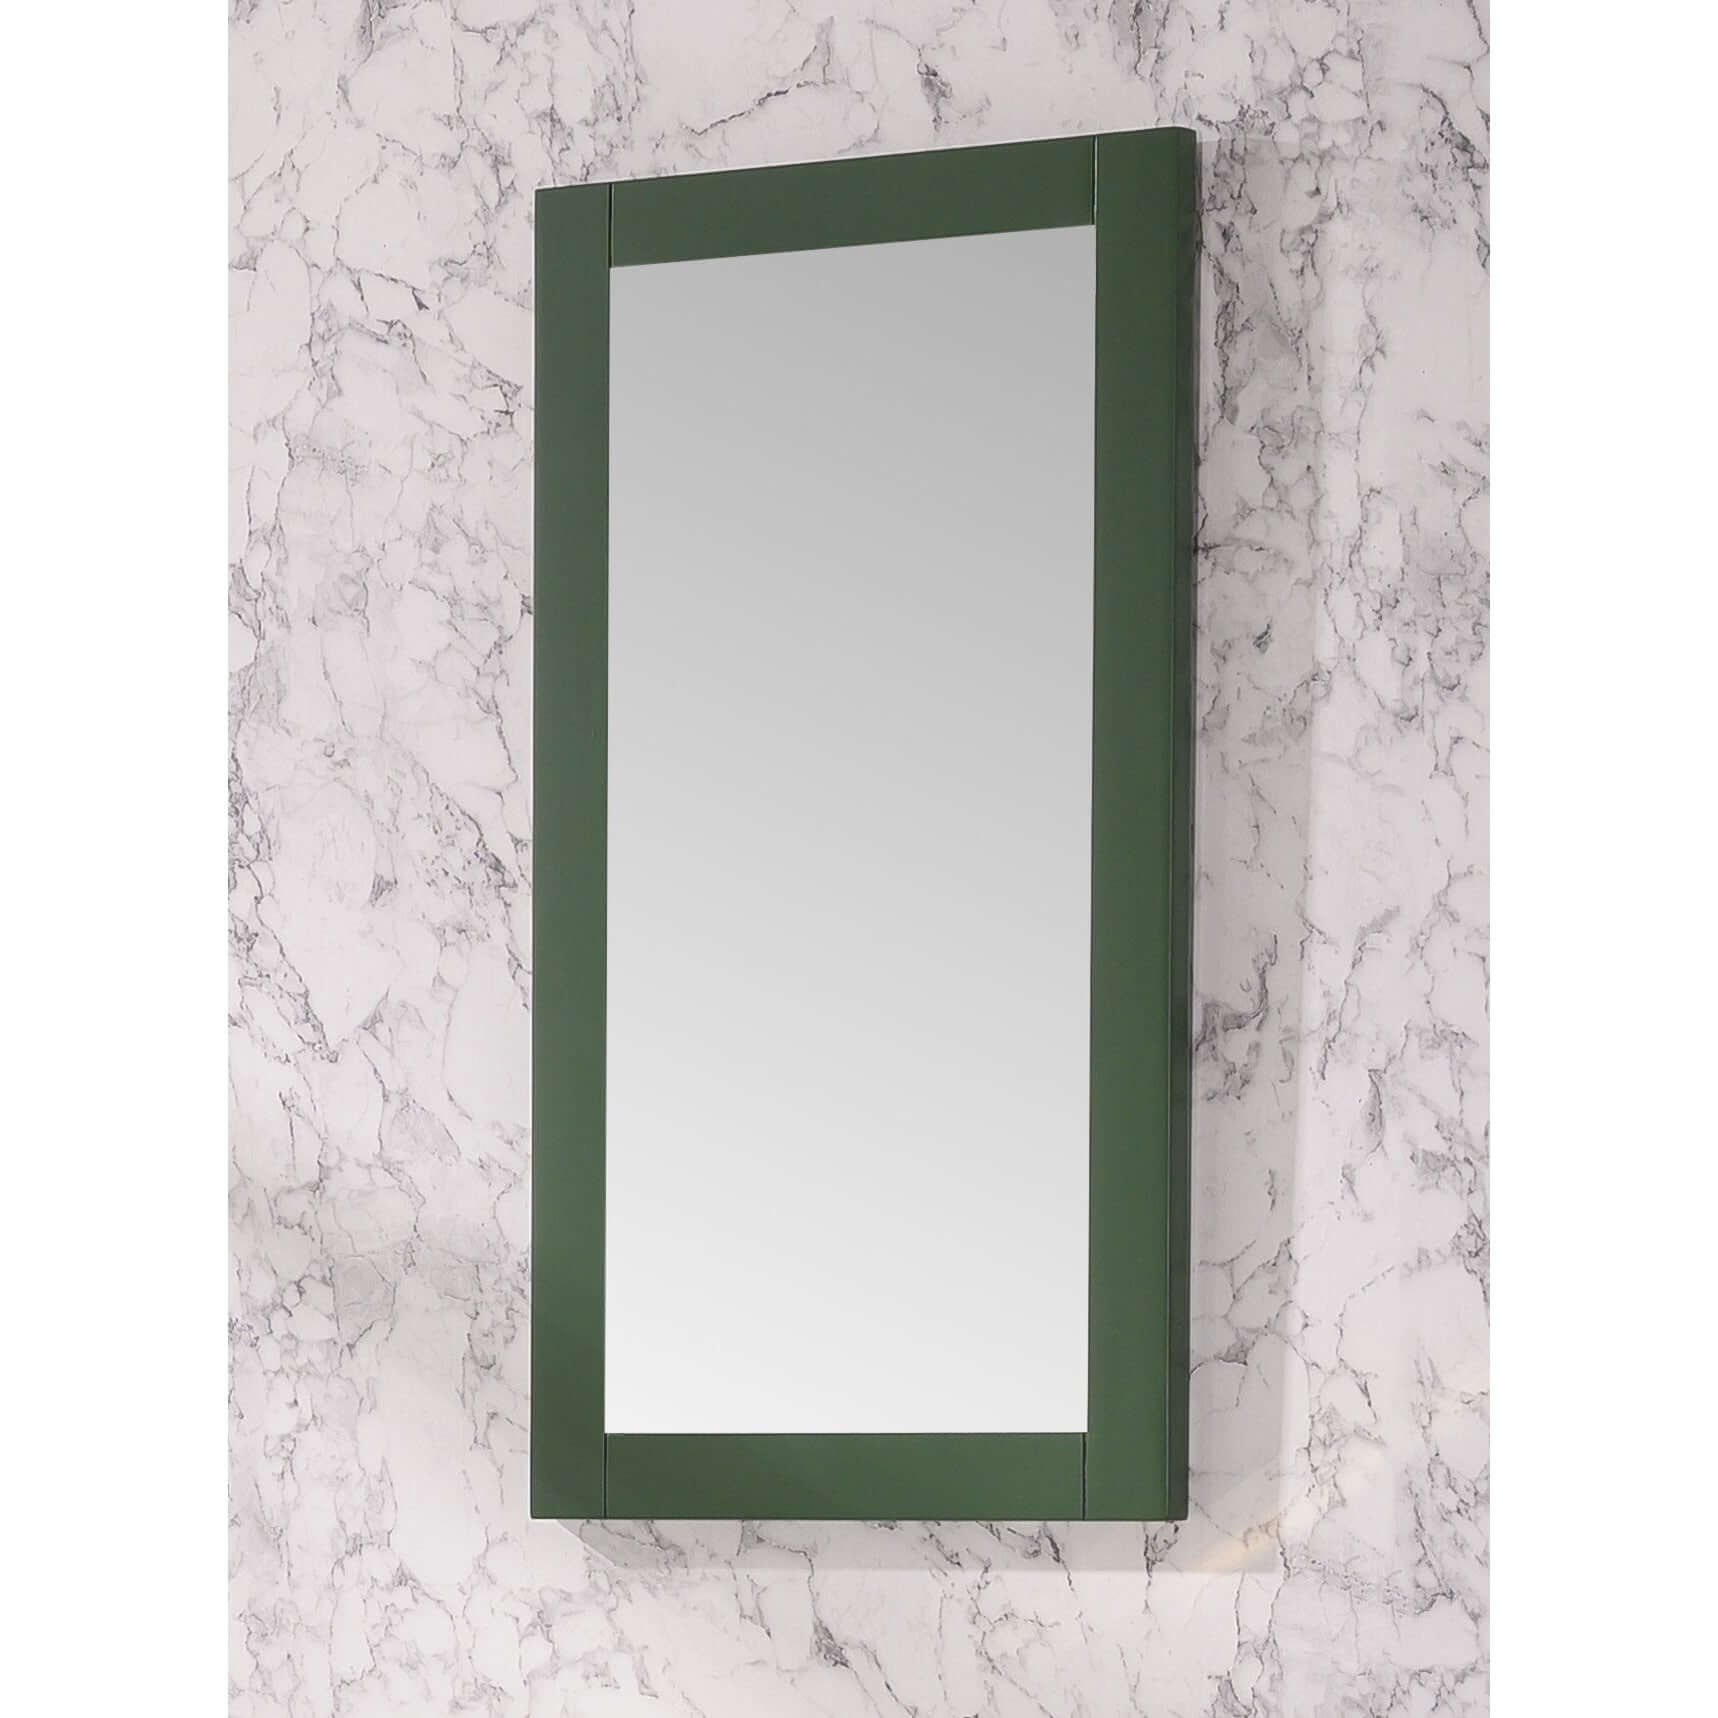 16" Pewter Green Mirror - WLF9018-VG-M